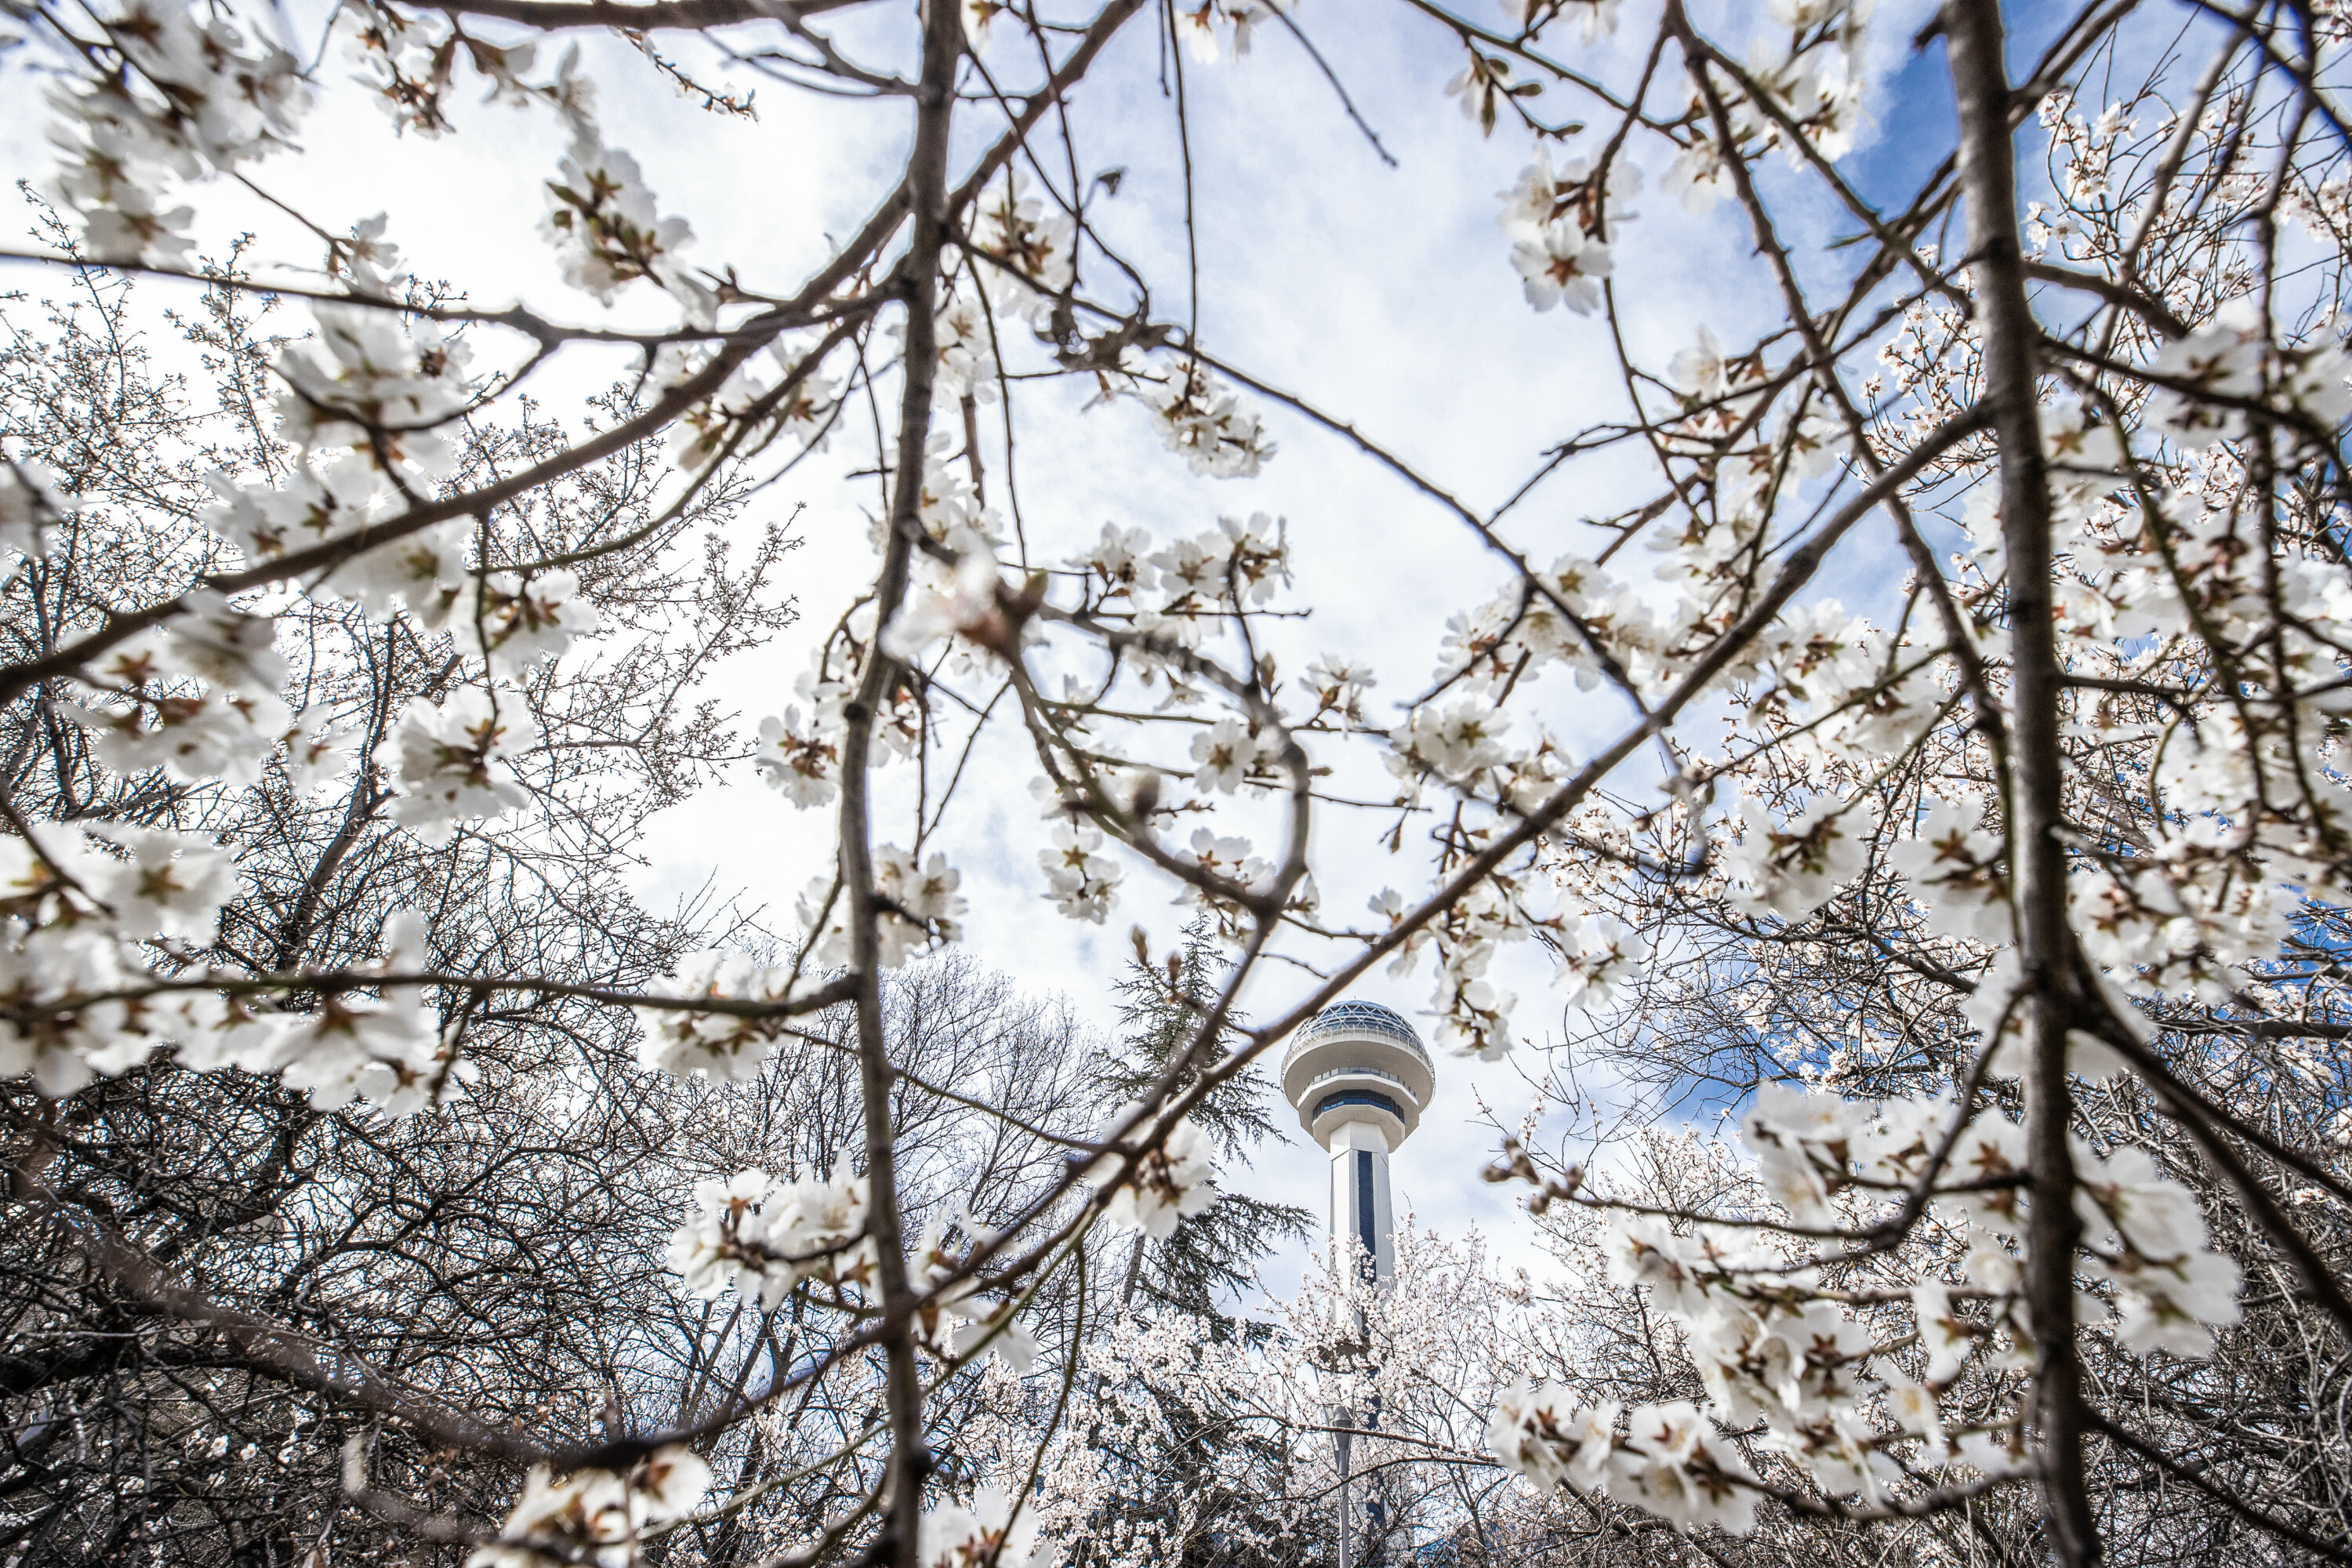 Spring blooms in Turkey's Ankara